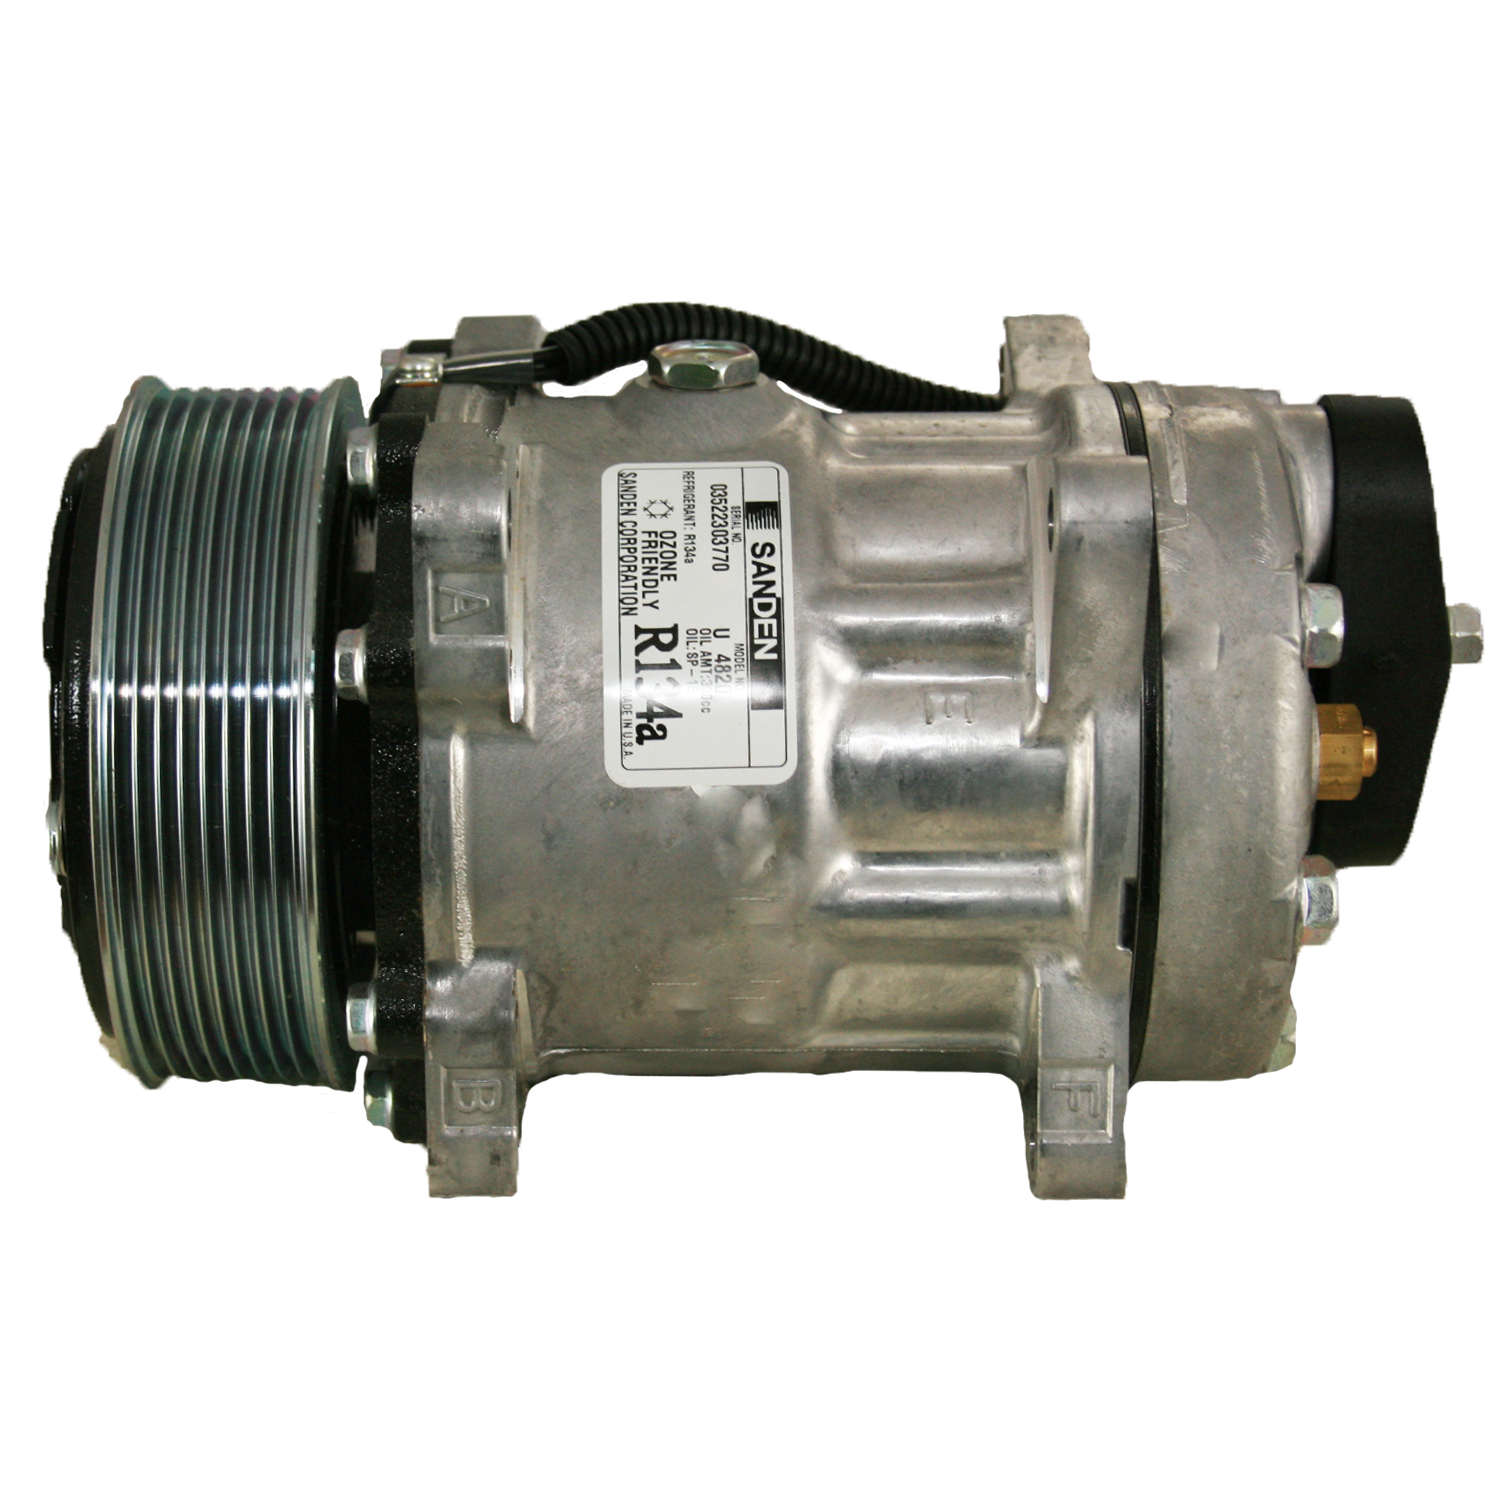 TCW Compressor 40575.801NEW New Product Image field_60b6a13a6e67c